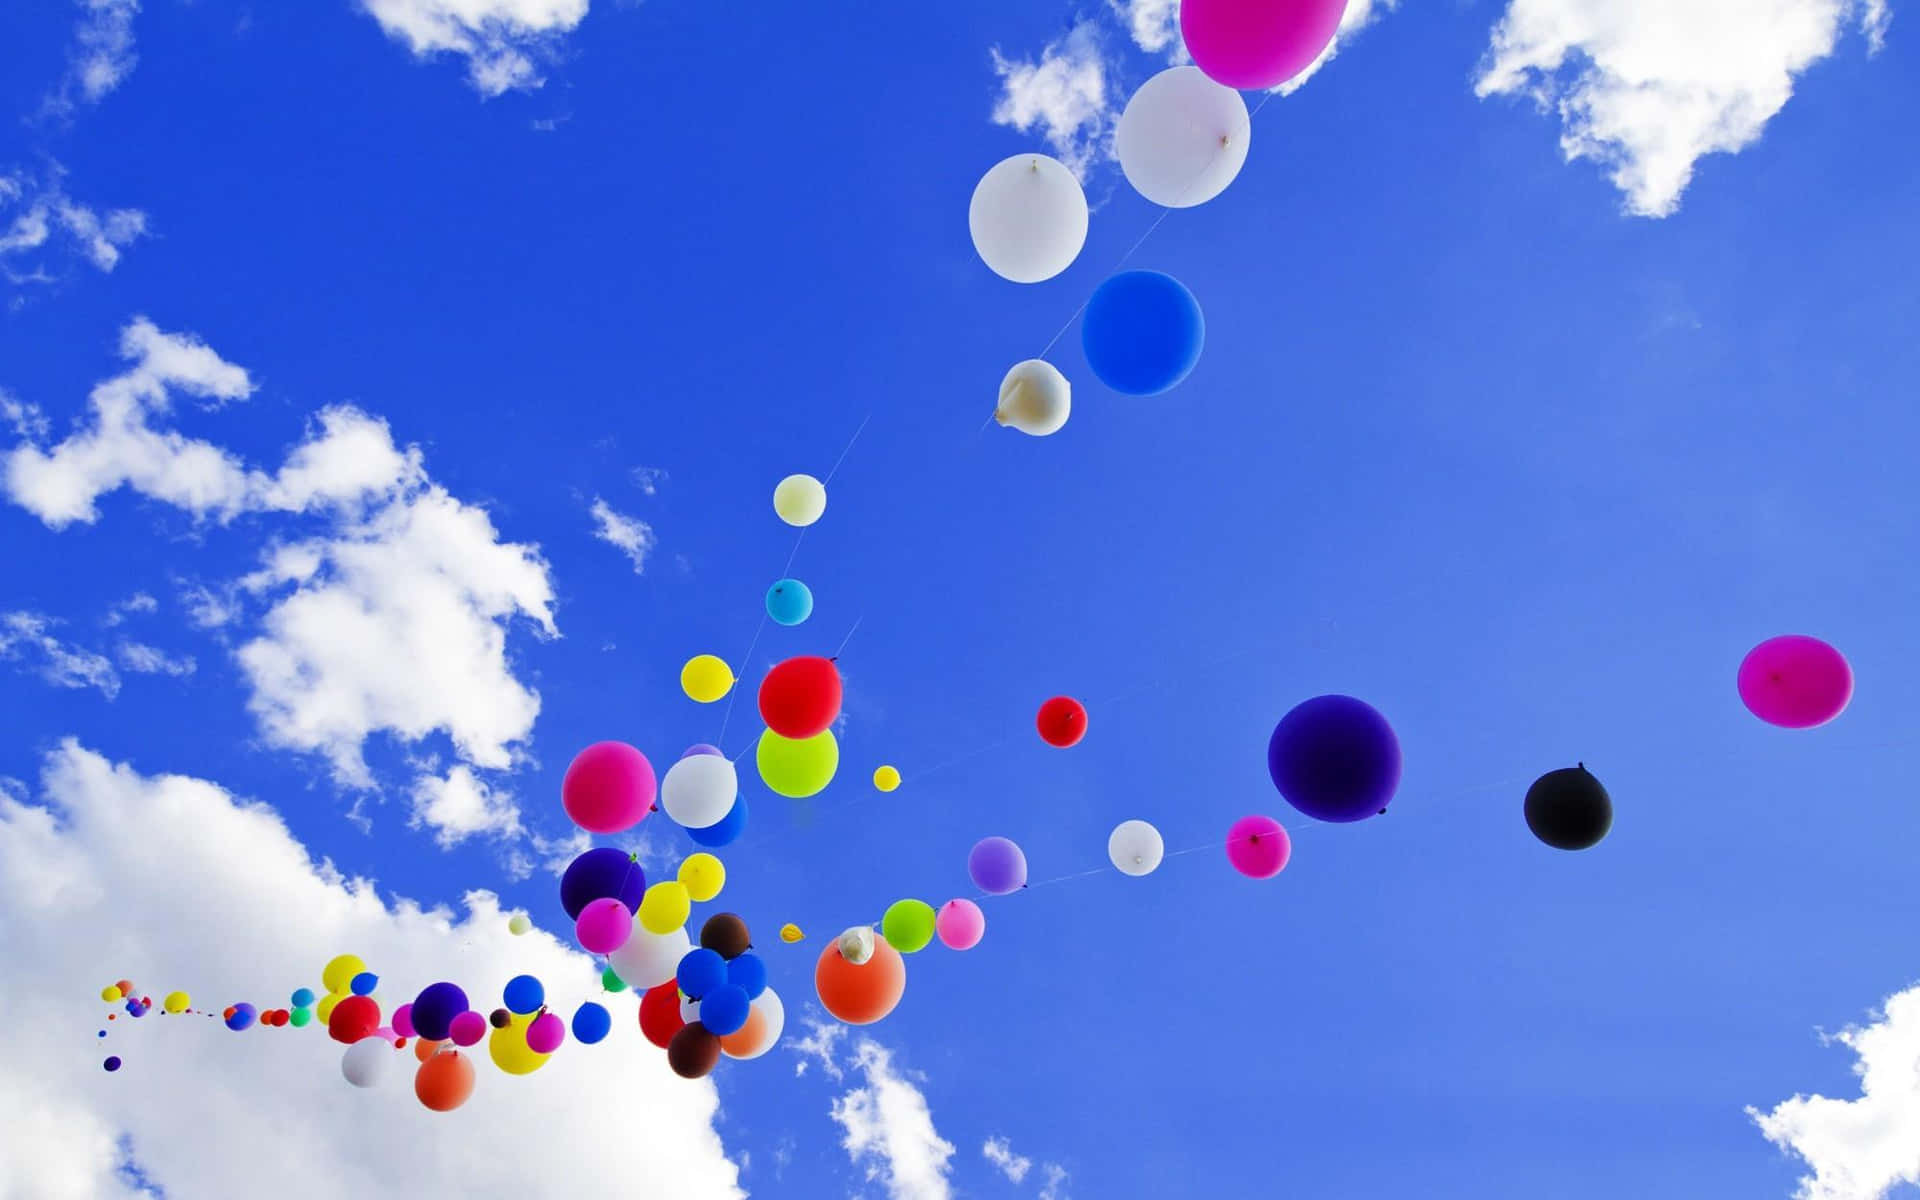 Wonderful colors and joy at a balloon gathering